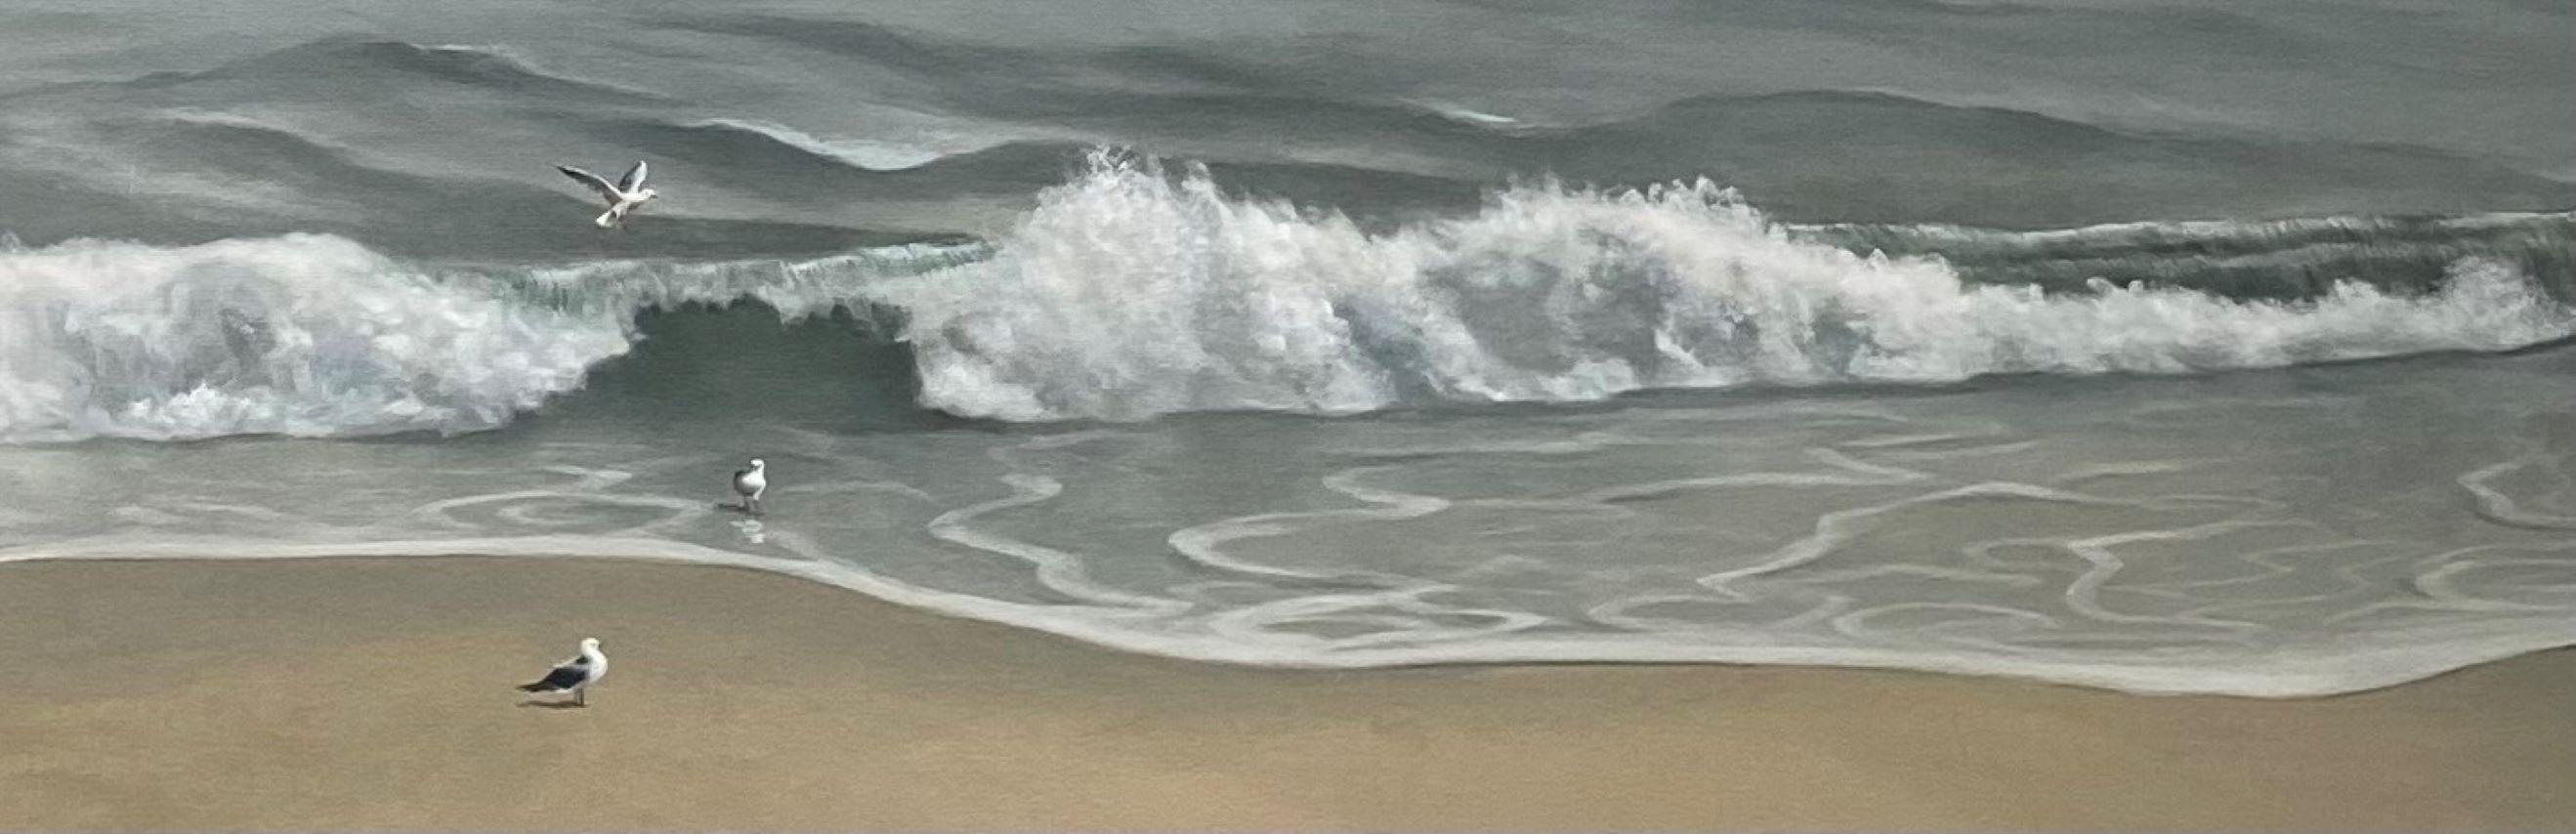 Morning Surf, original 36x48 contemporary realist marine landscape - Realist Painting by Rinaldo Skalamera